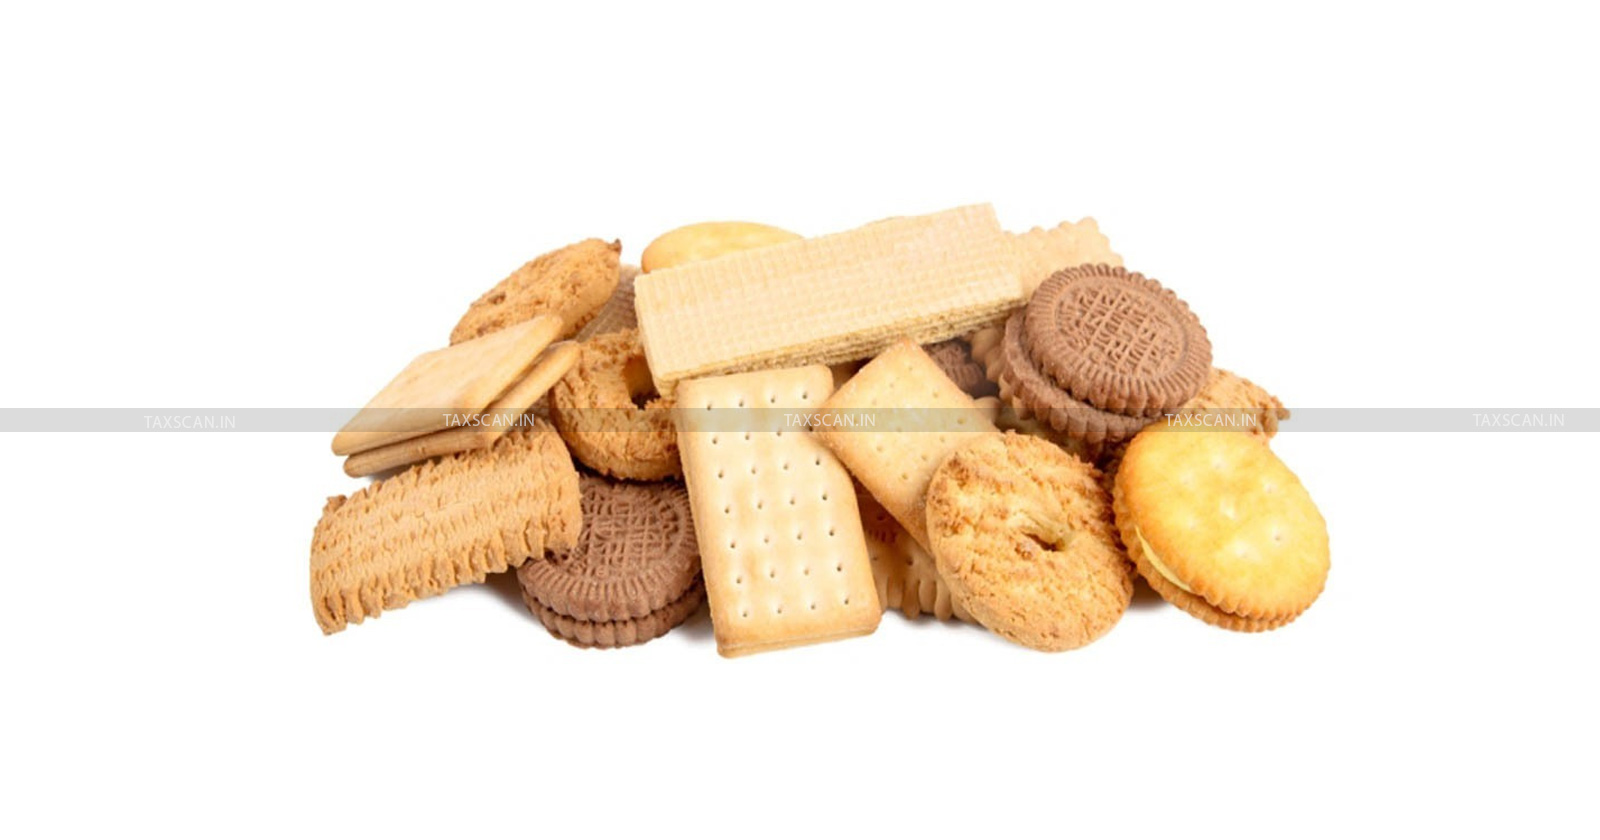 ITAT - Re adjudication - Cash Deposits - Biscuit - Confectionery Business - Demonetization - taxscan